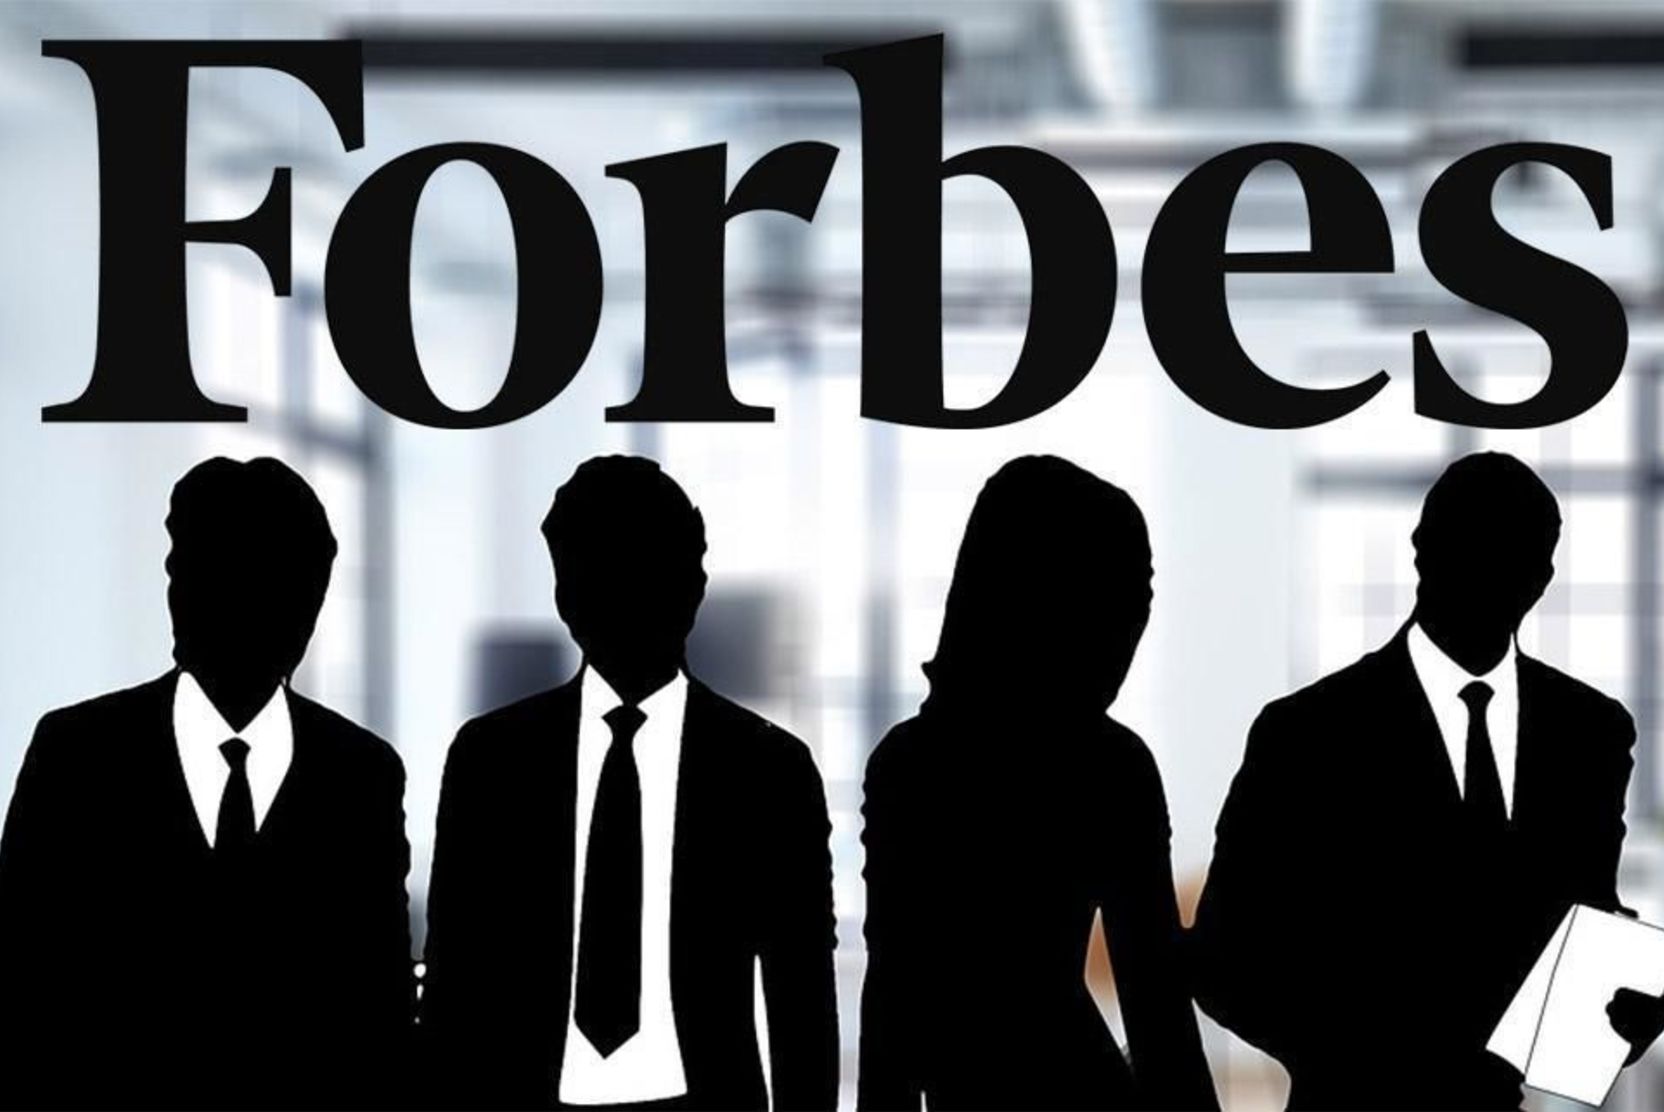 Президент LVMH Арно стал лидером списка миллиардеров Forbes